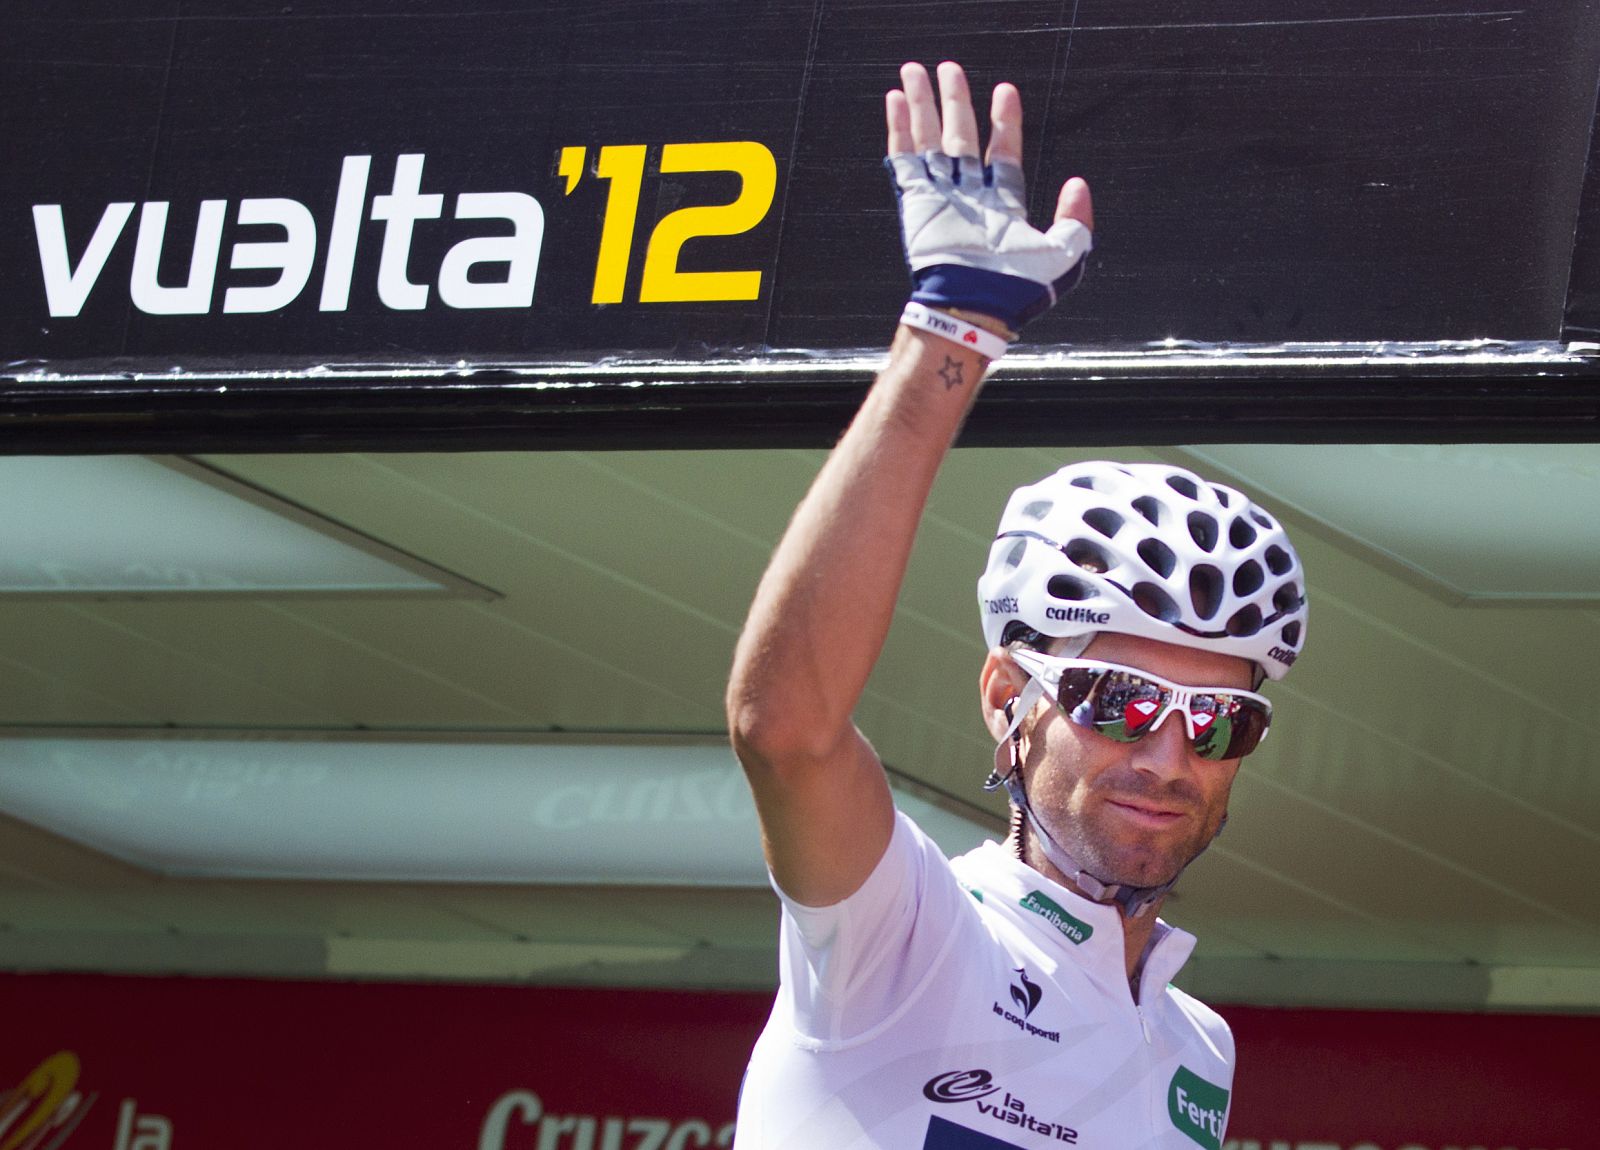 Imagen de Alejandro Valverde antes de iniciarse la etapa 20.